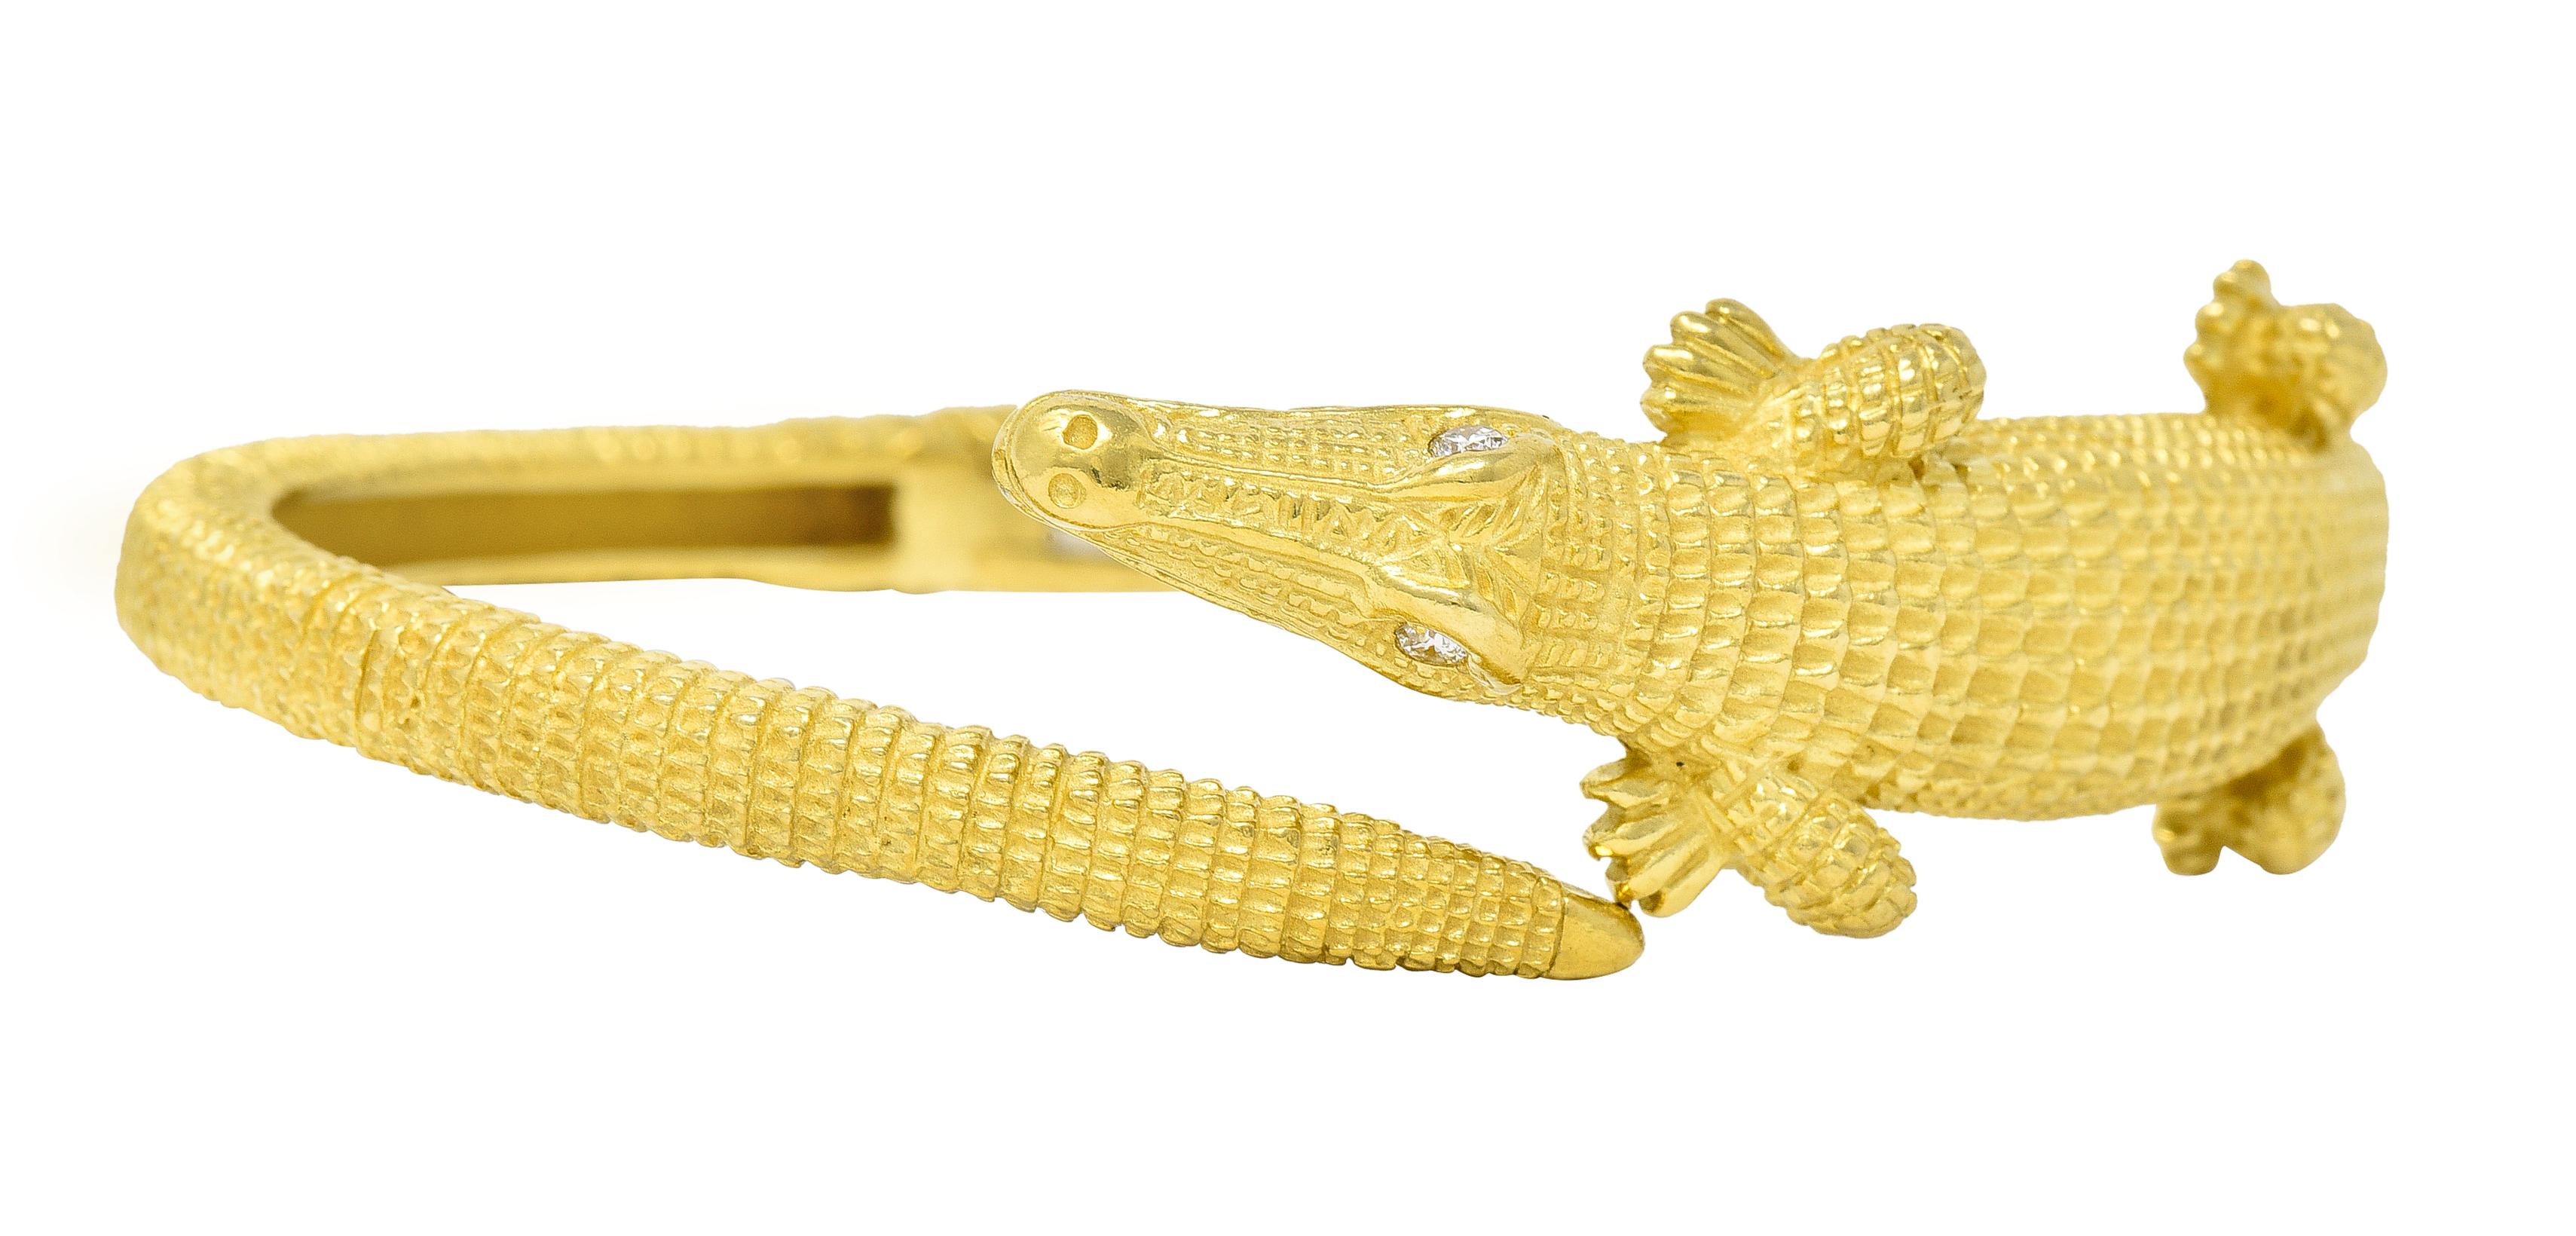 yellow alligator